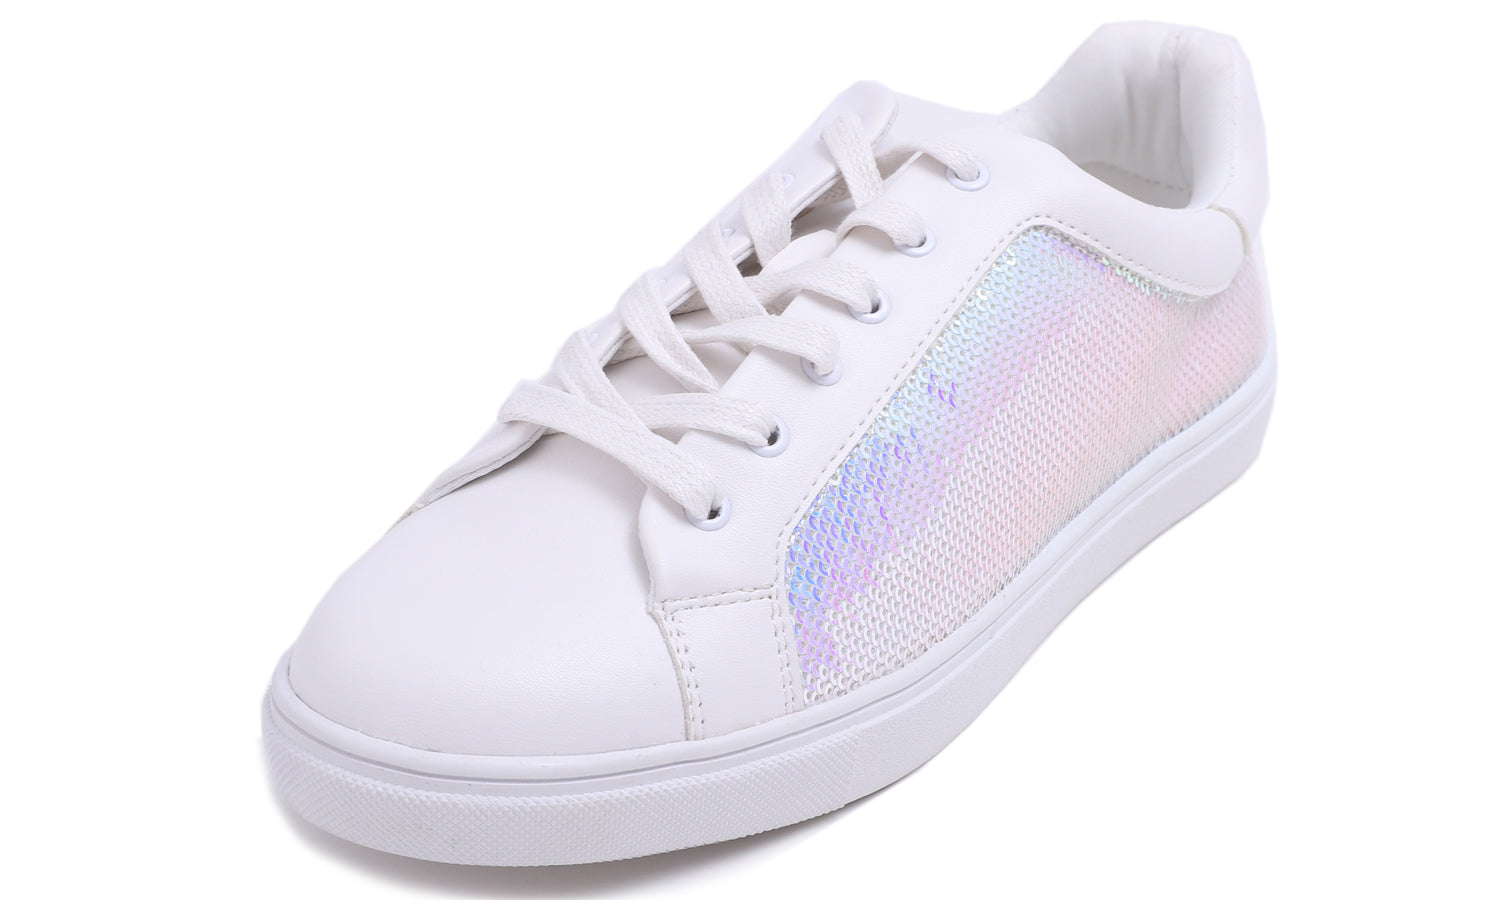 .com .com, BELOS Women's Glitter Shoes Sparkly Lightweight  Metallic Sequins Tennis Shoes(9B(M) US, White), Fashion Sneakers